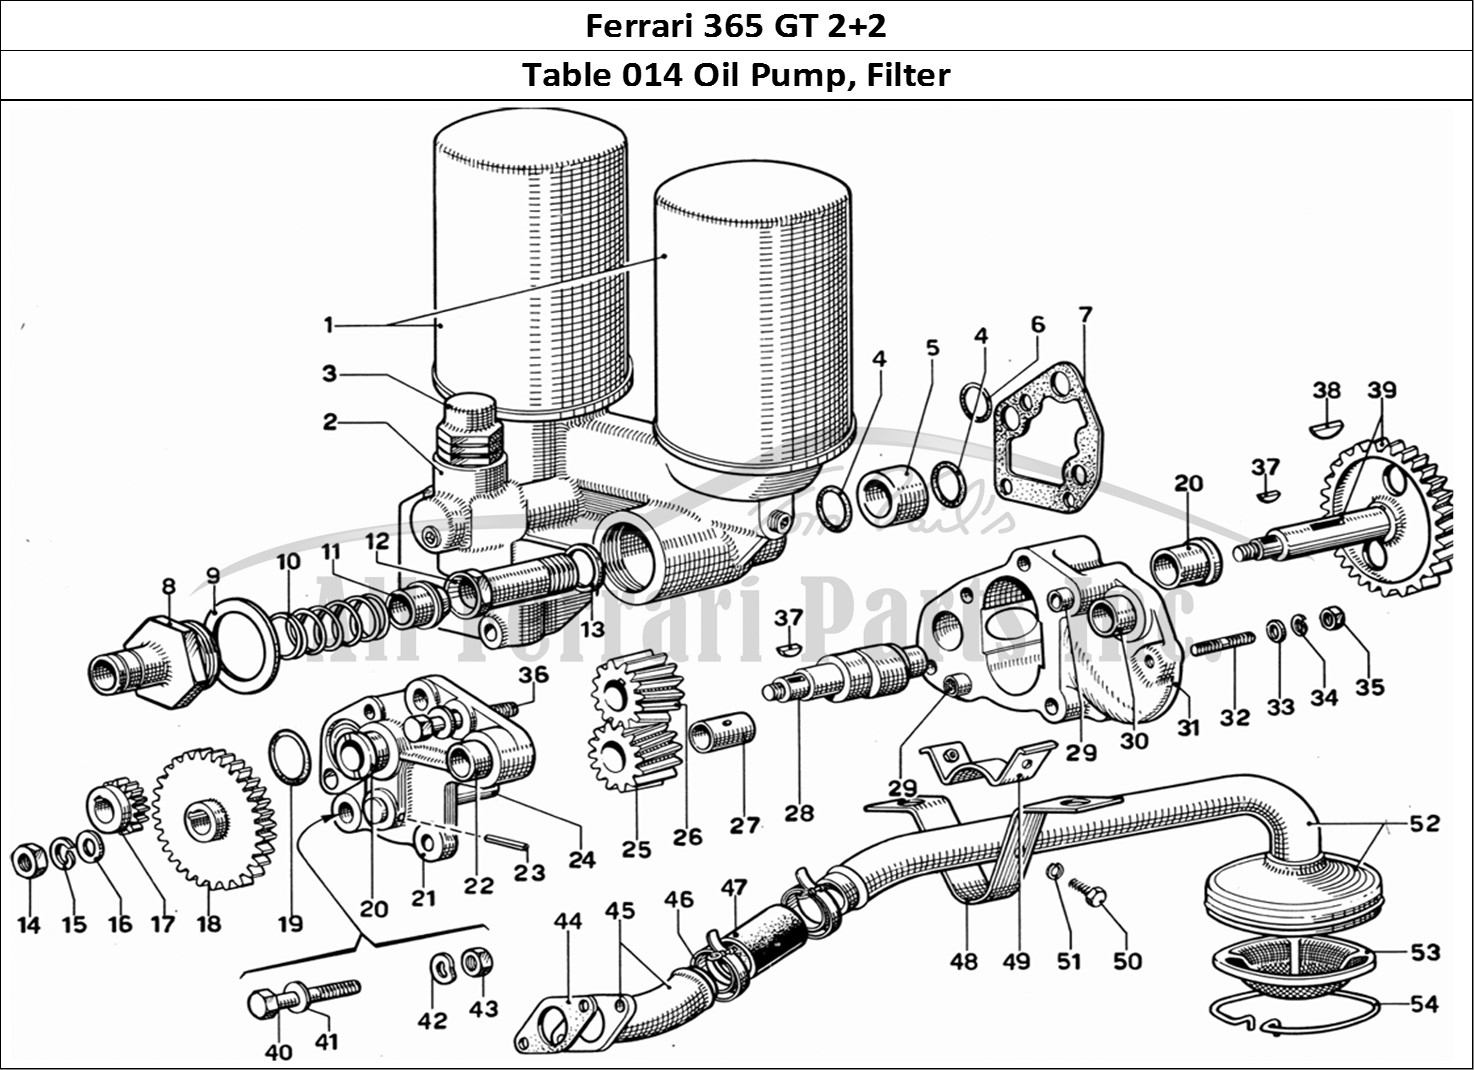 Ferrari Parts Ferrari 365 GT 2+2 (Mechanical) Page 014 Oil Pump and Filters